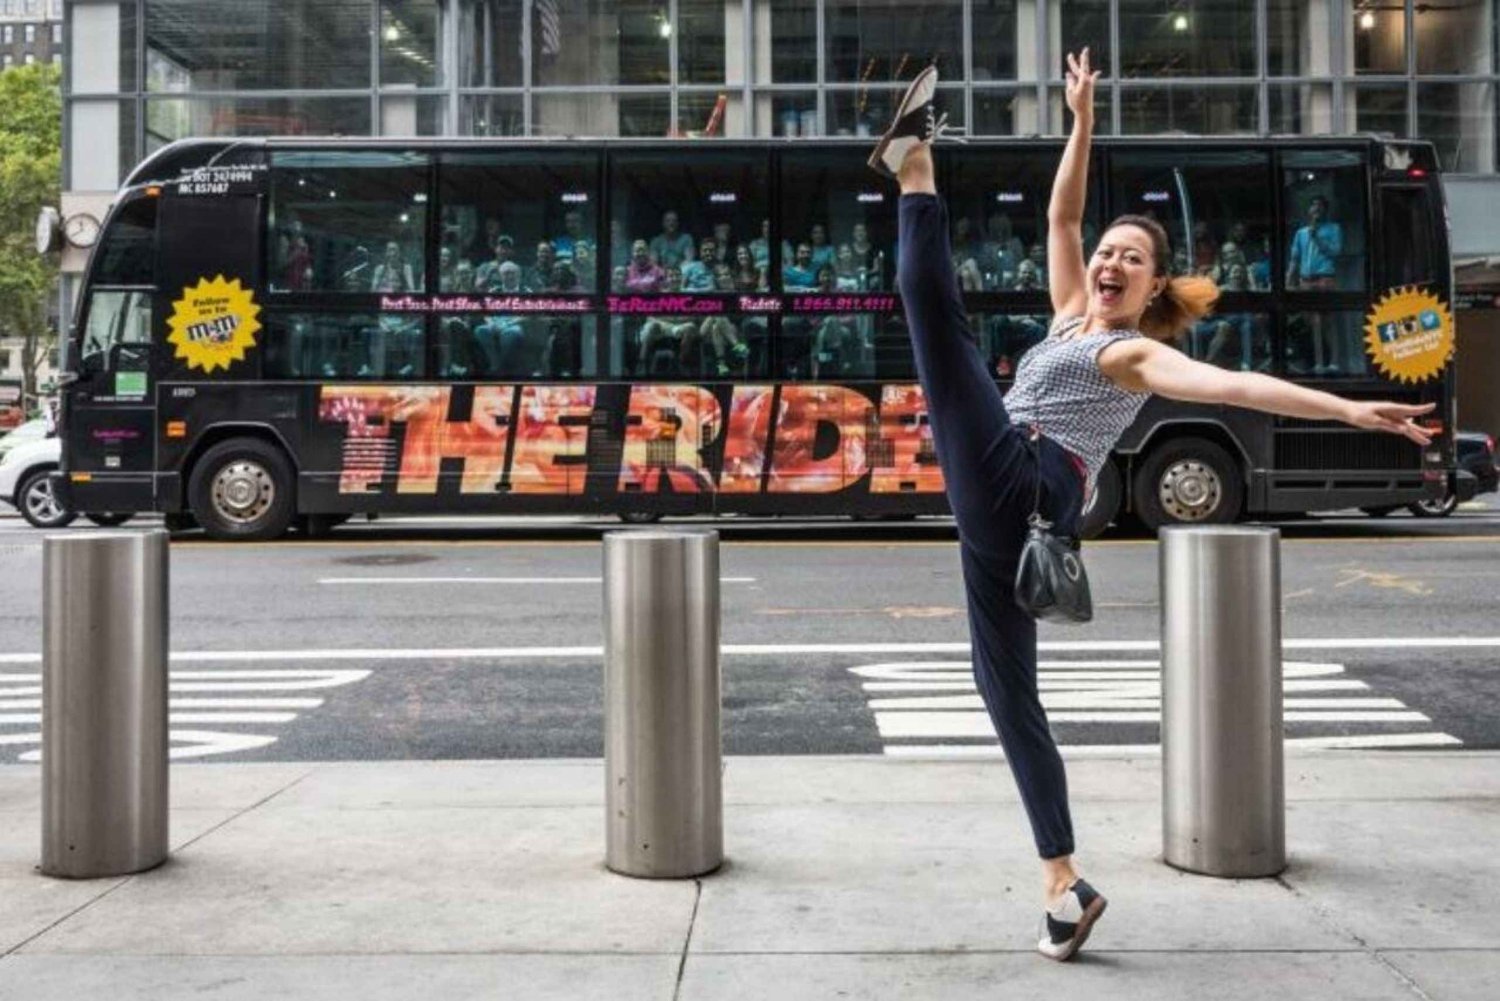 NYC: The Ride Theatre Bus & Best of Manhattan Walking Tour